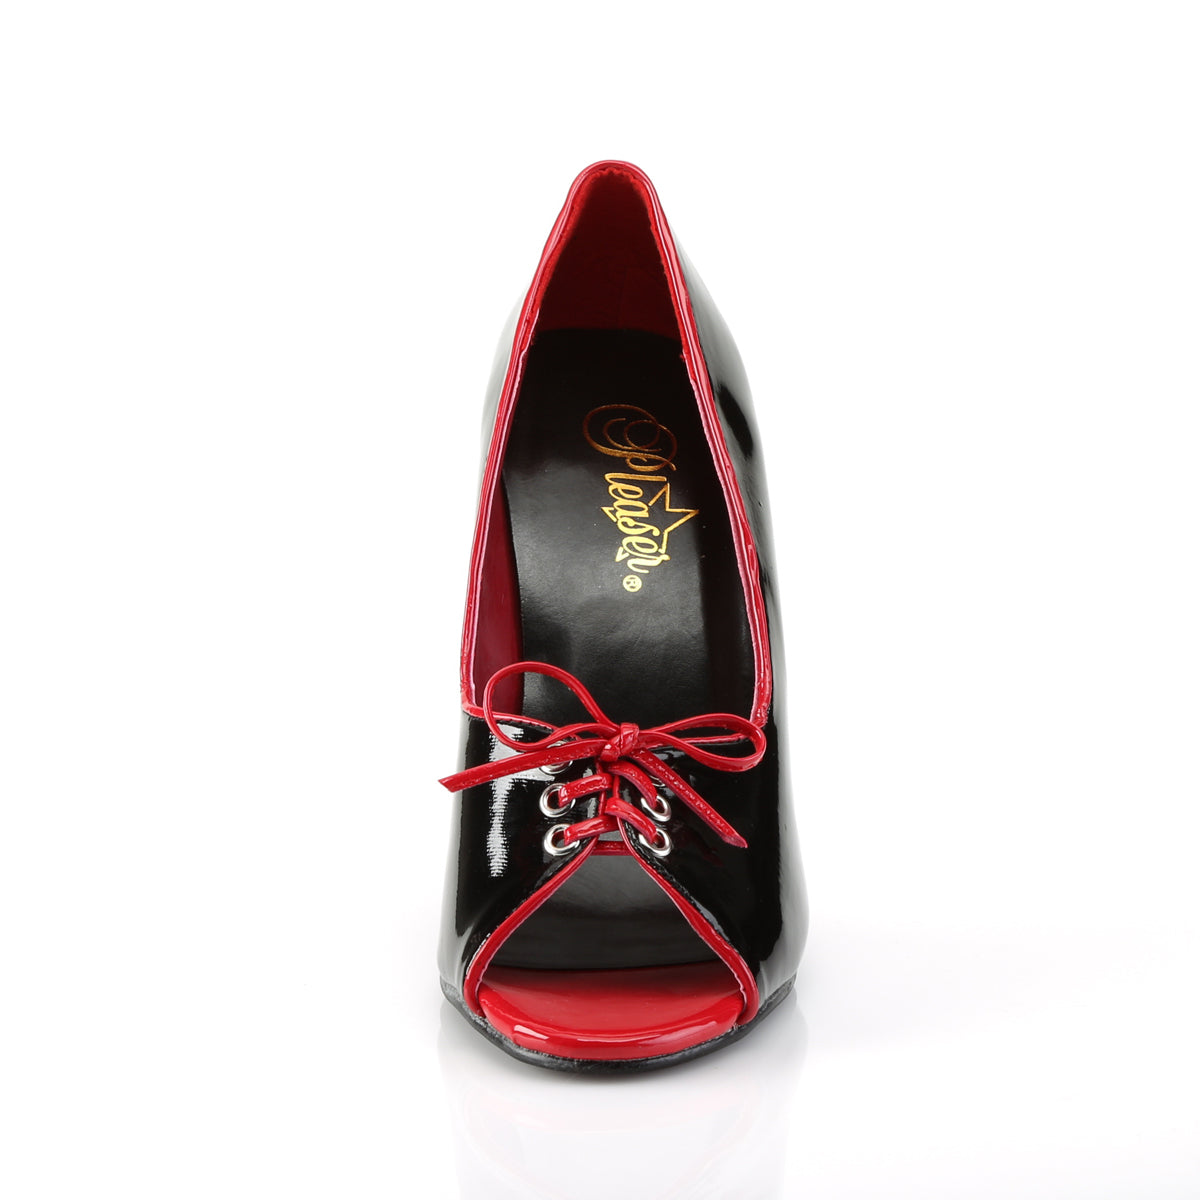 SEDUCE-216 Pleaser 5 Inch Heel Black and Red Fetish Footwear-Pleaser- Sexy Shoes Alternative Footwear